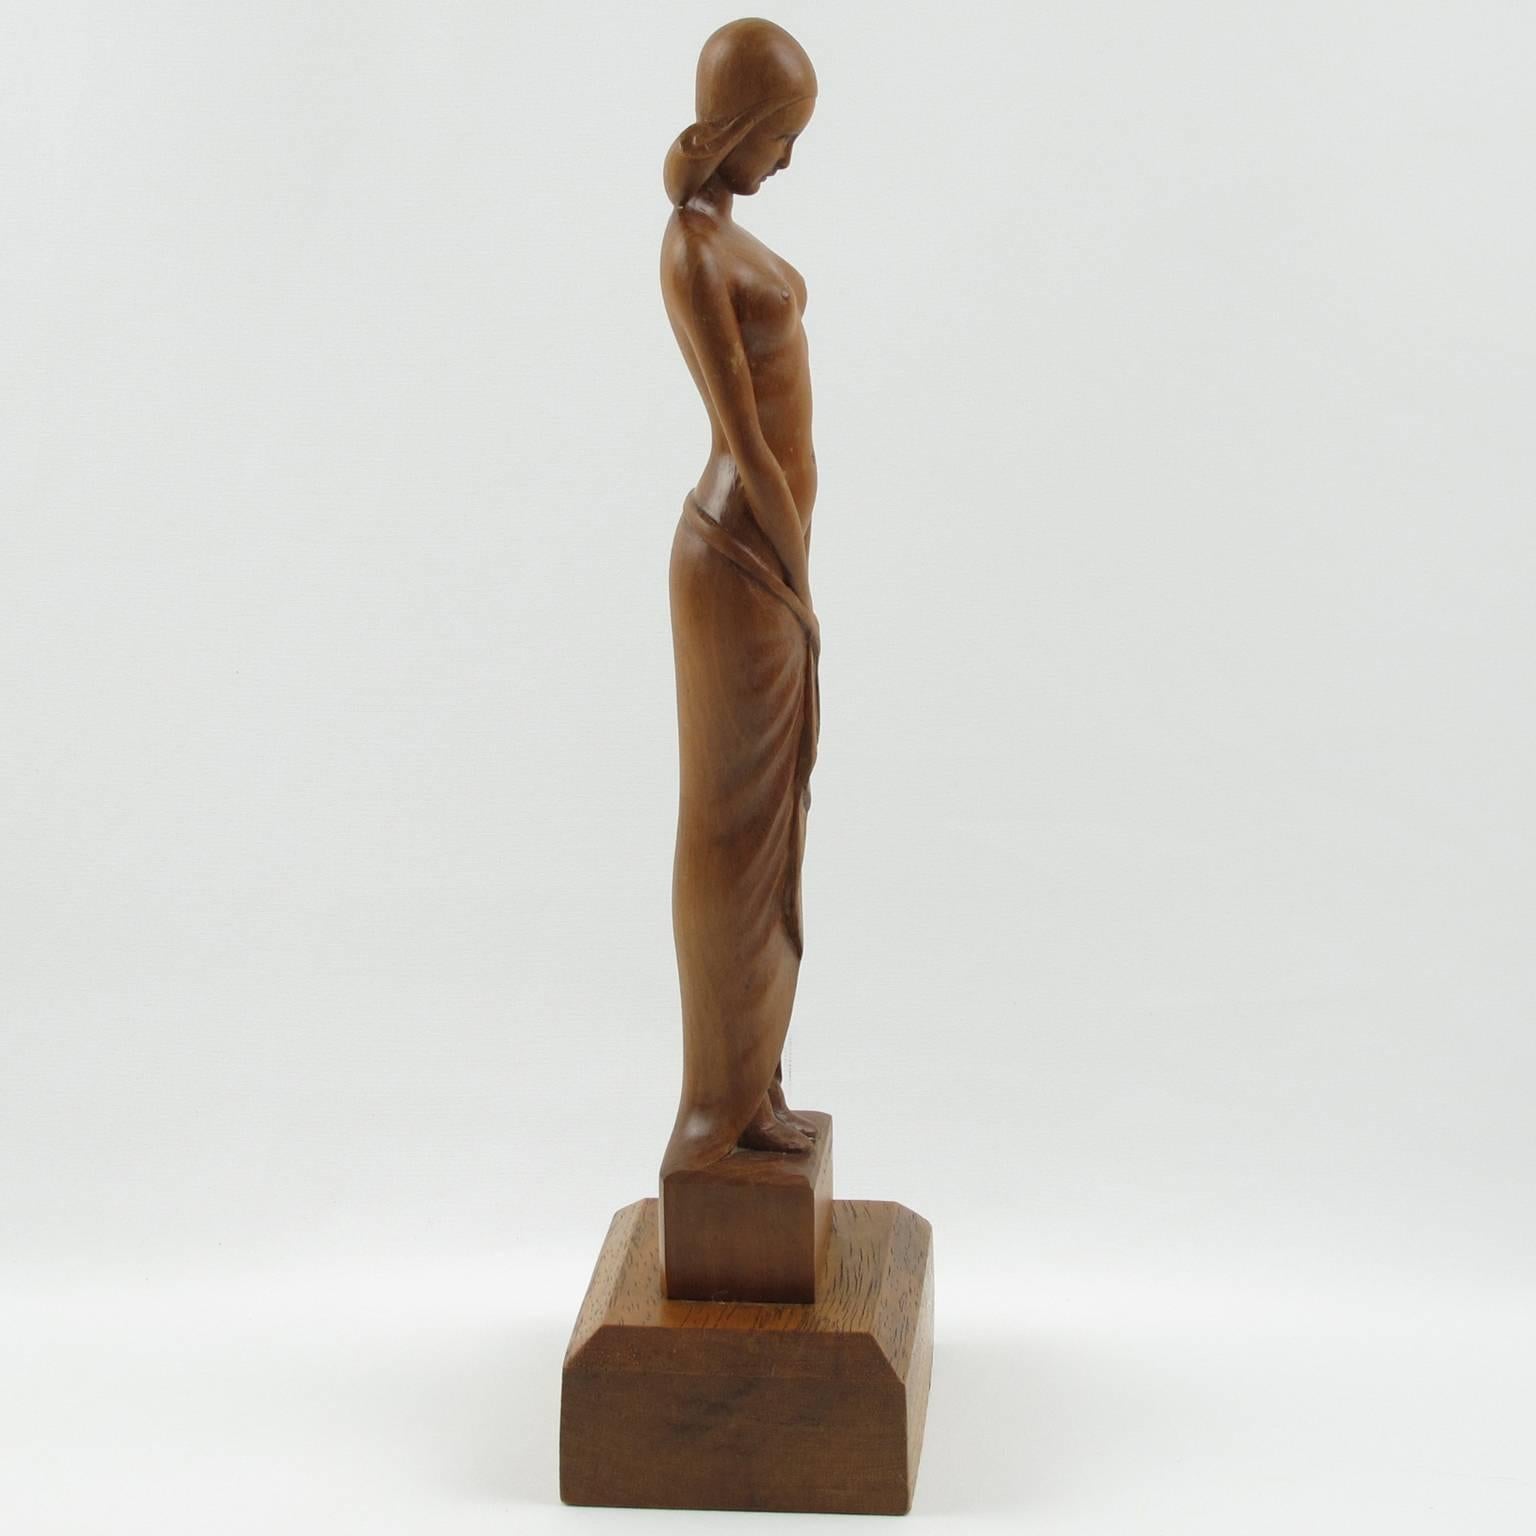 Mid-20th Century Vintage French Art Deco Wooden Sculpture Statuette by L. Goussot, circa 1930s